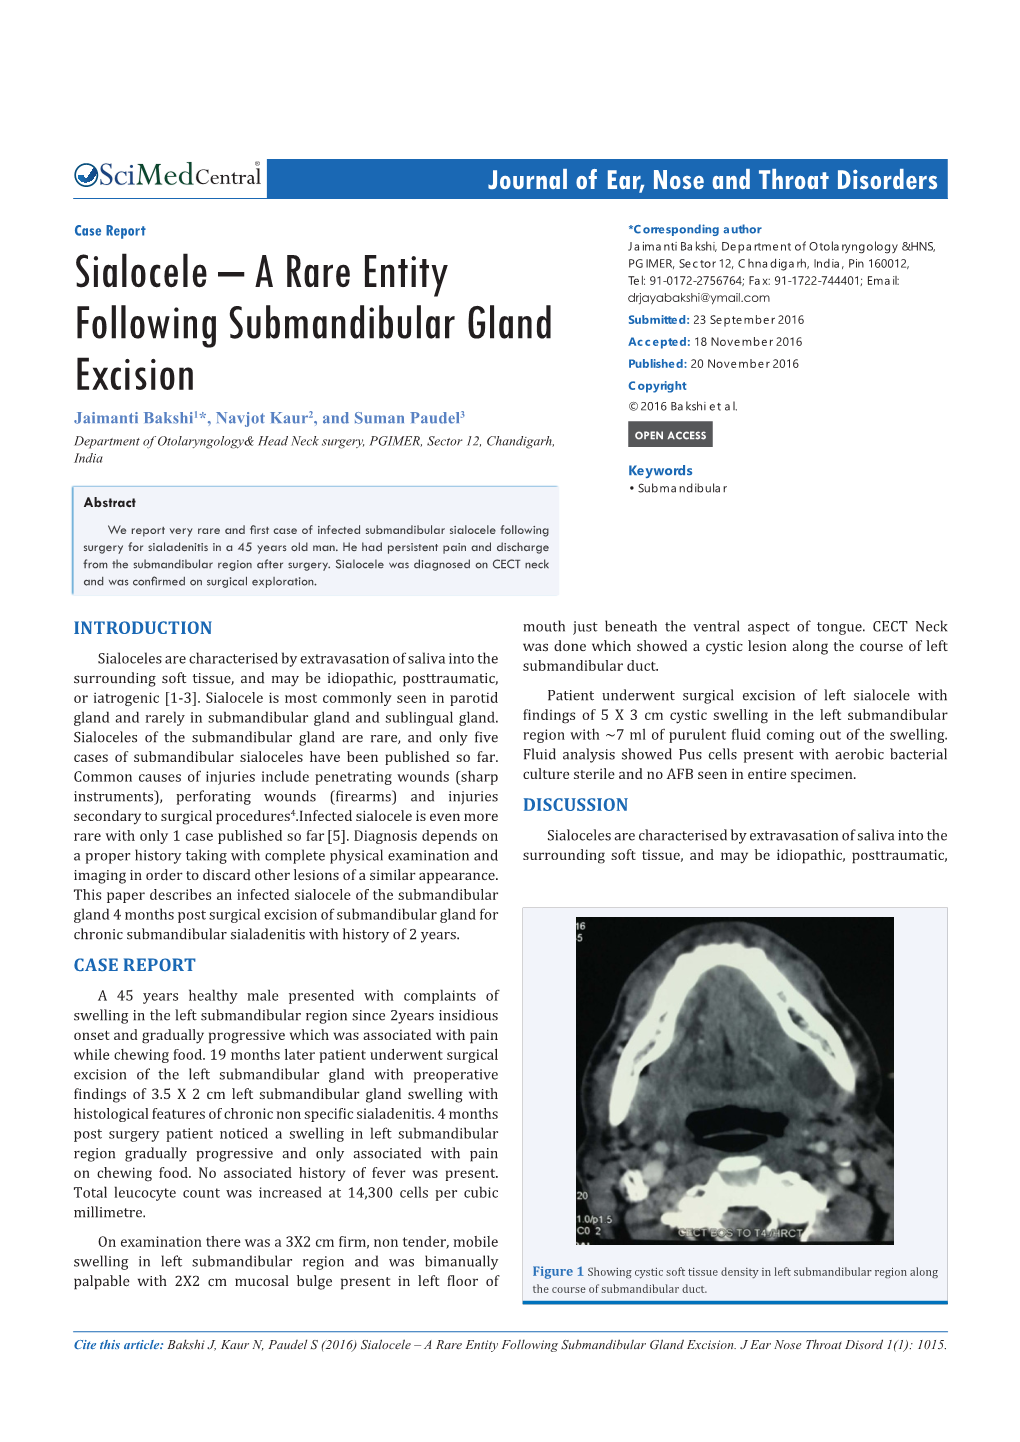 Sialocele – a Rare Entity Following Submandibular Gland Excision